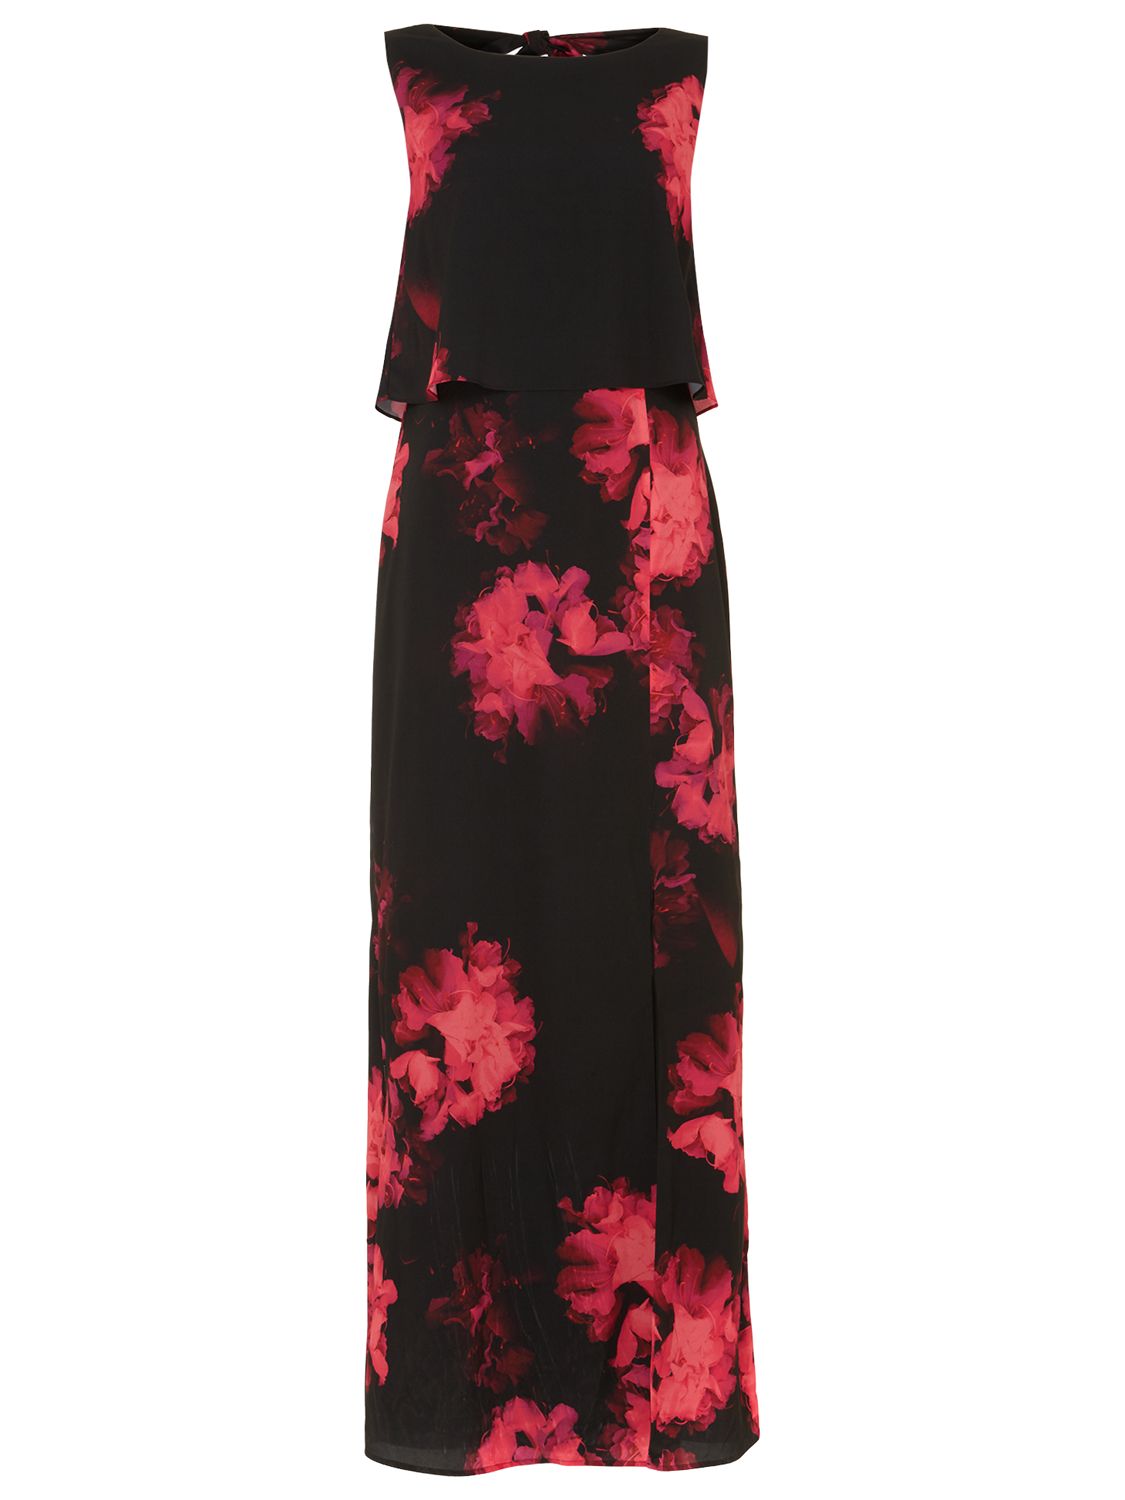 Phase Eight Ali Floral Printed Maxi Dress, Black/Hot Pink at John Lewis & Partners